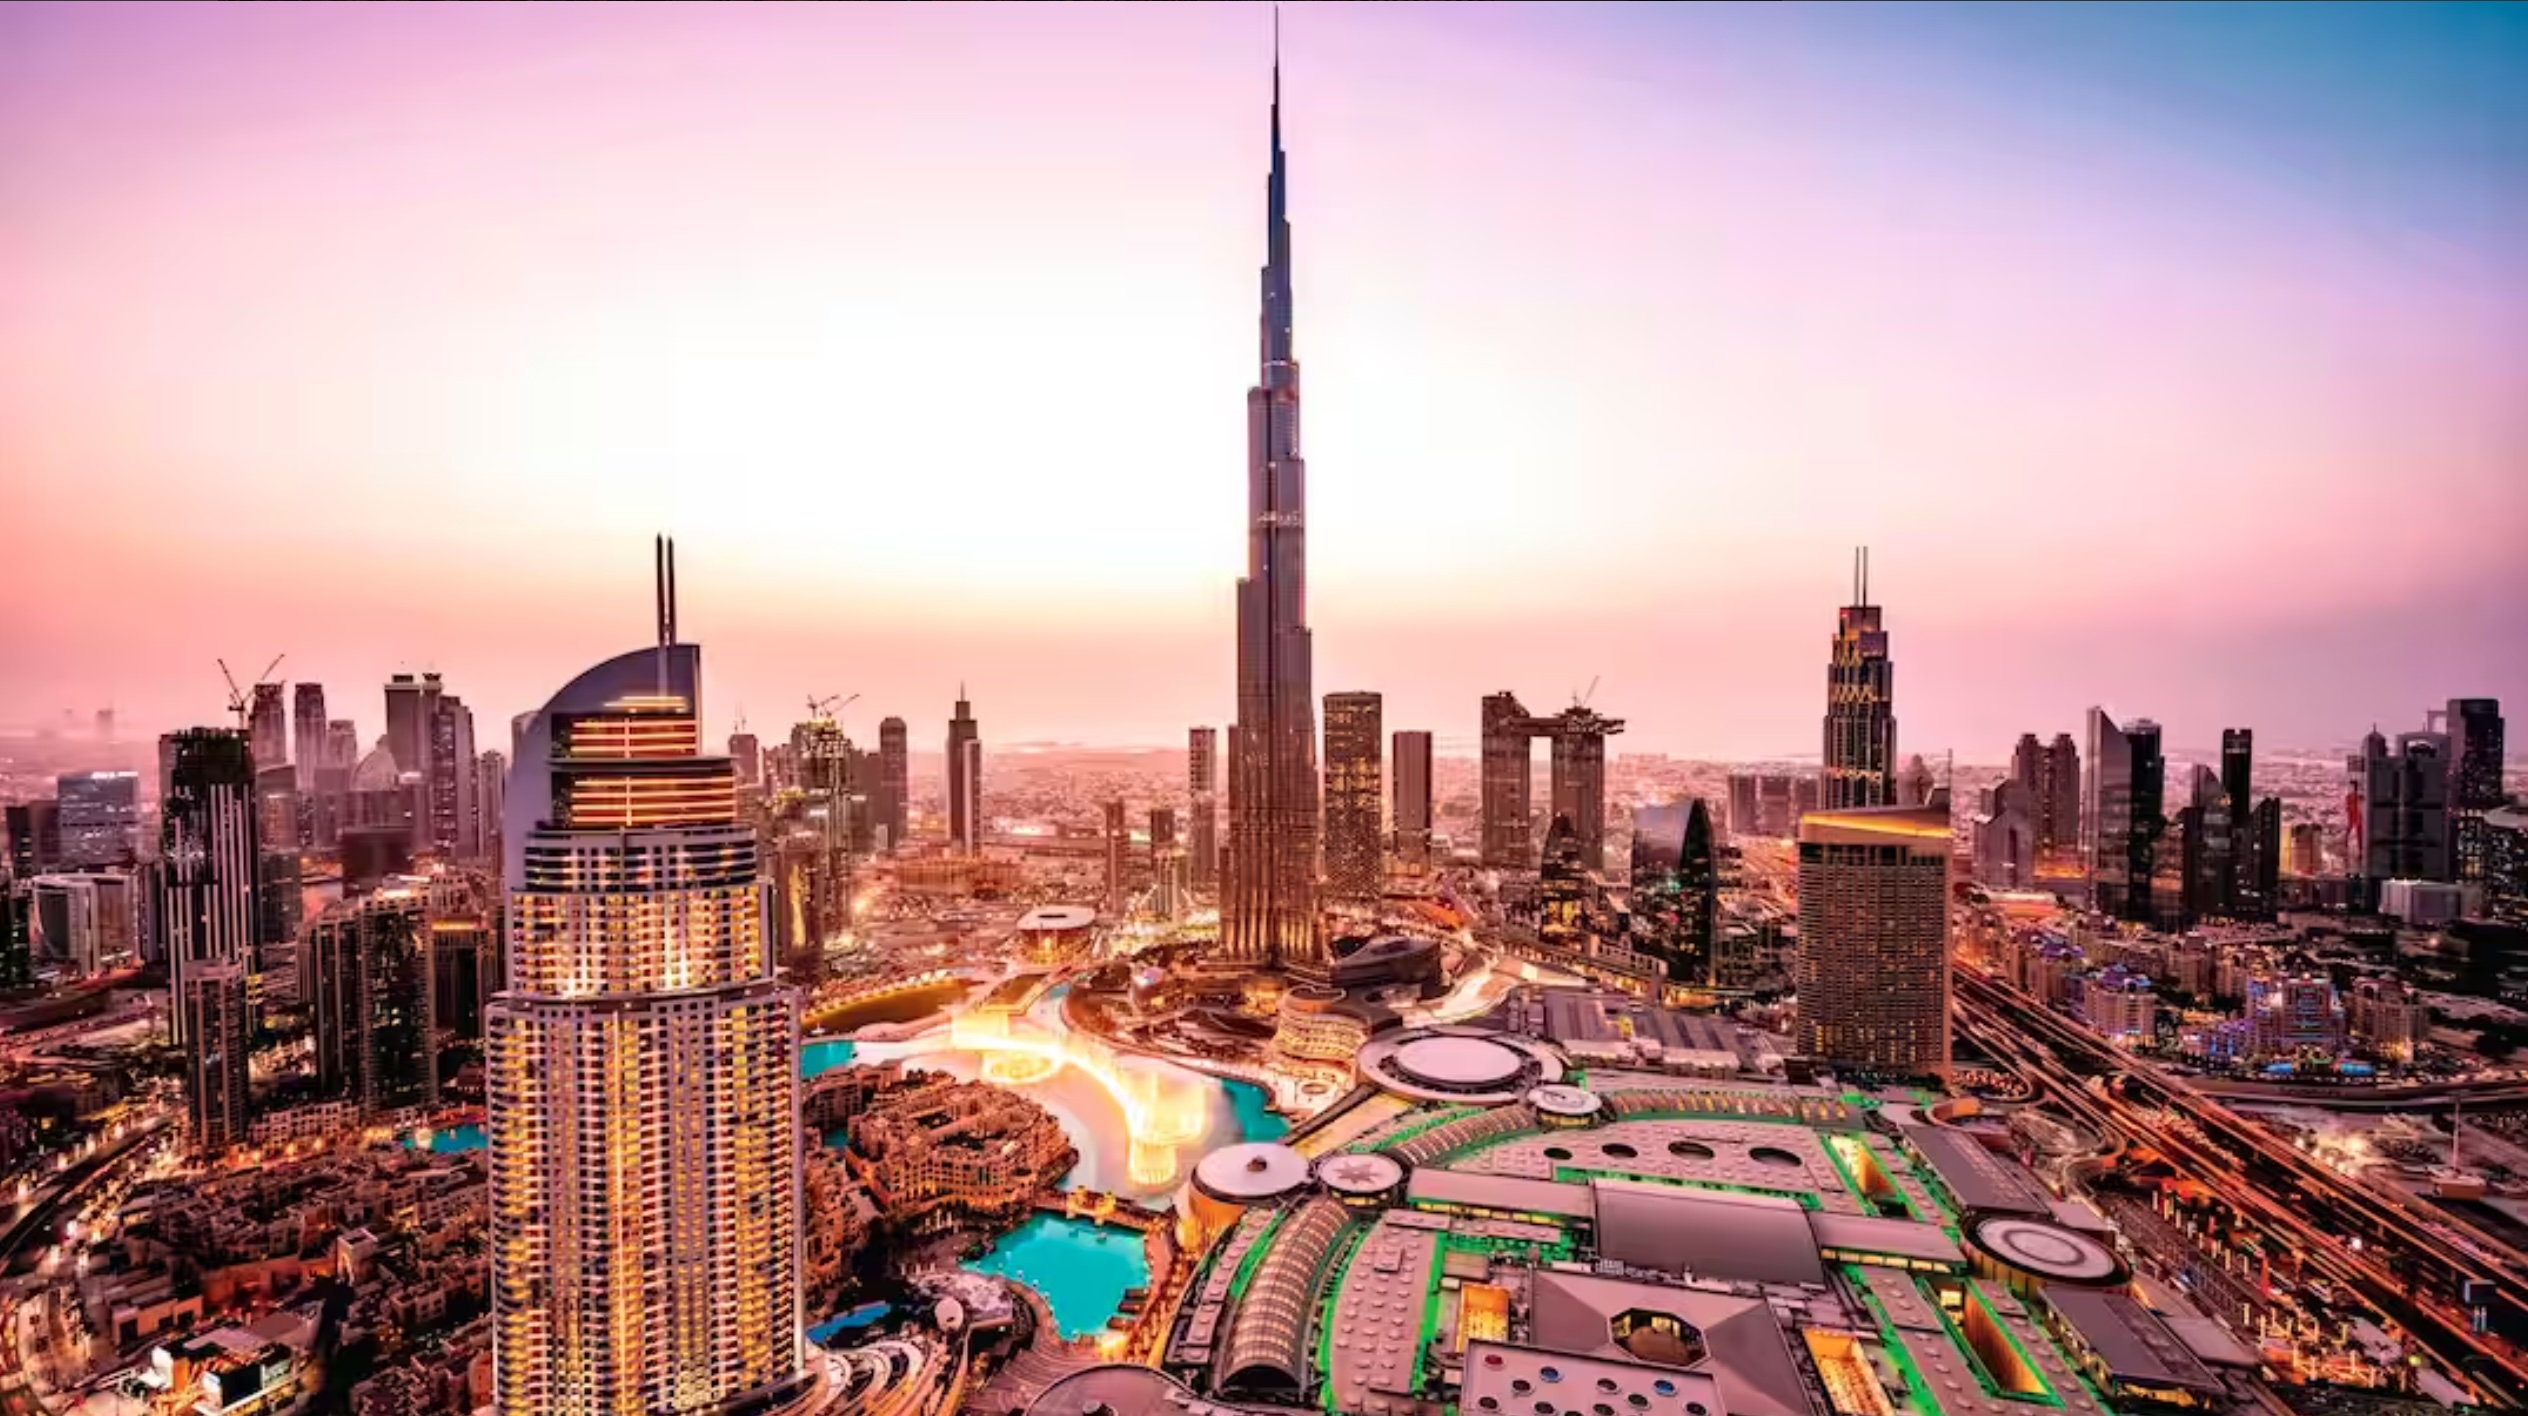 View across the city in Dubai, including the iconic Burj Khalifa